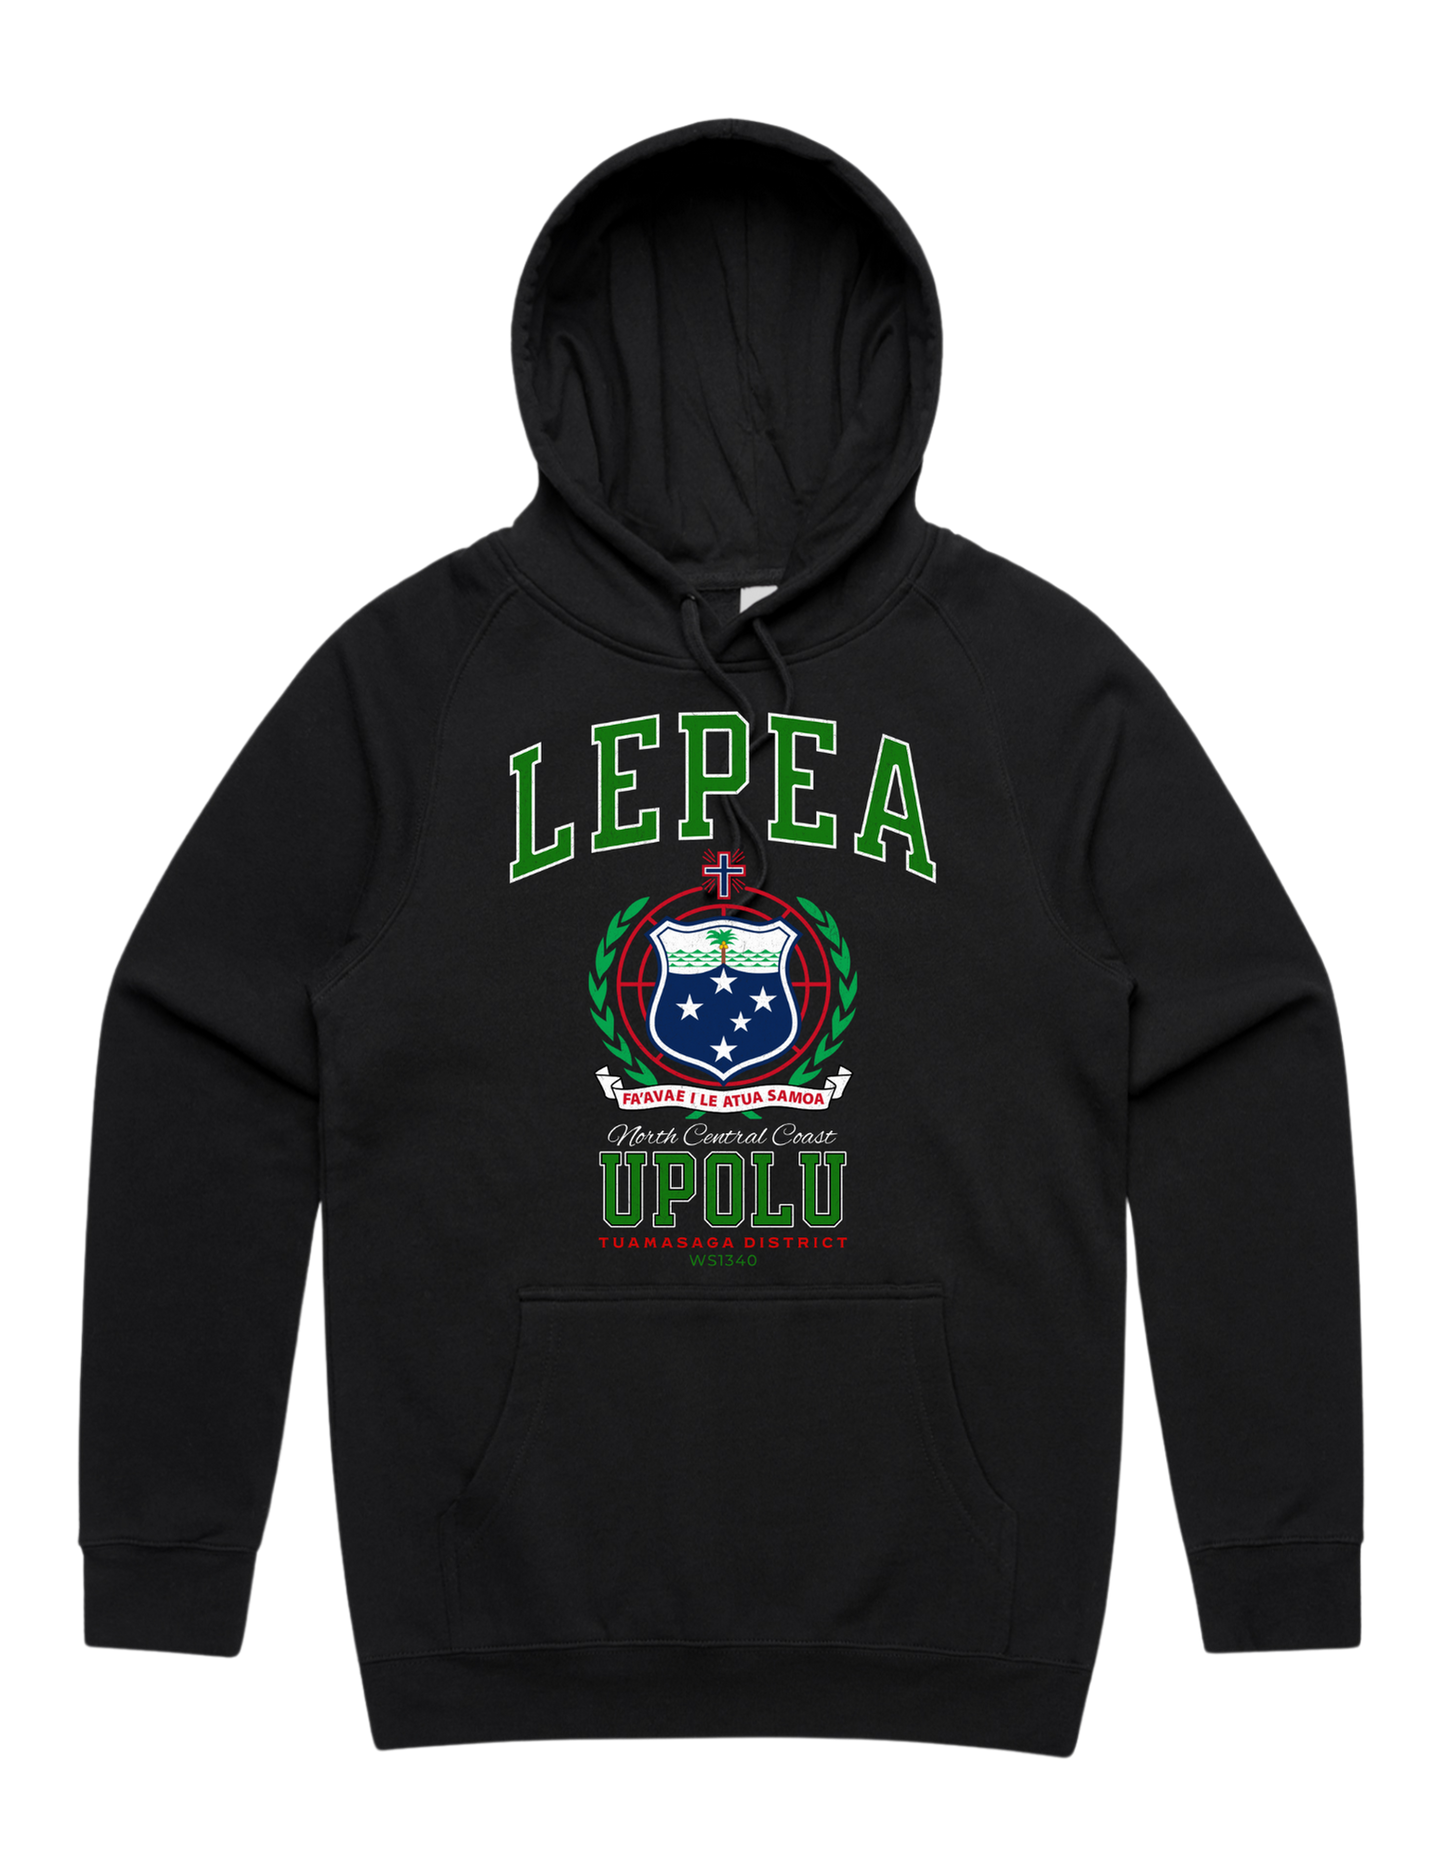 Lepea Supply Hood 5101 - AS Colour